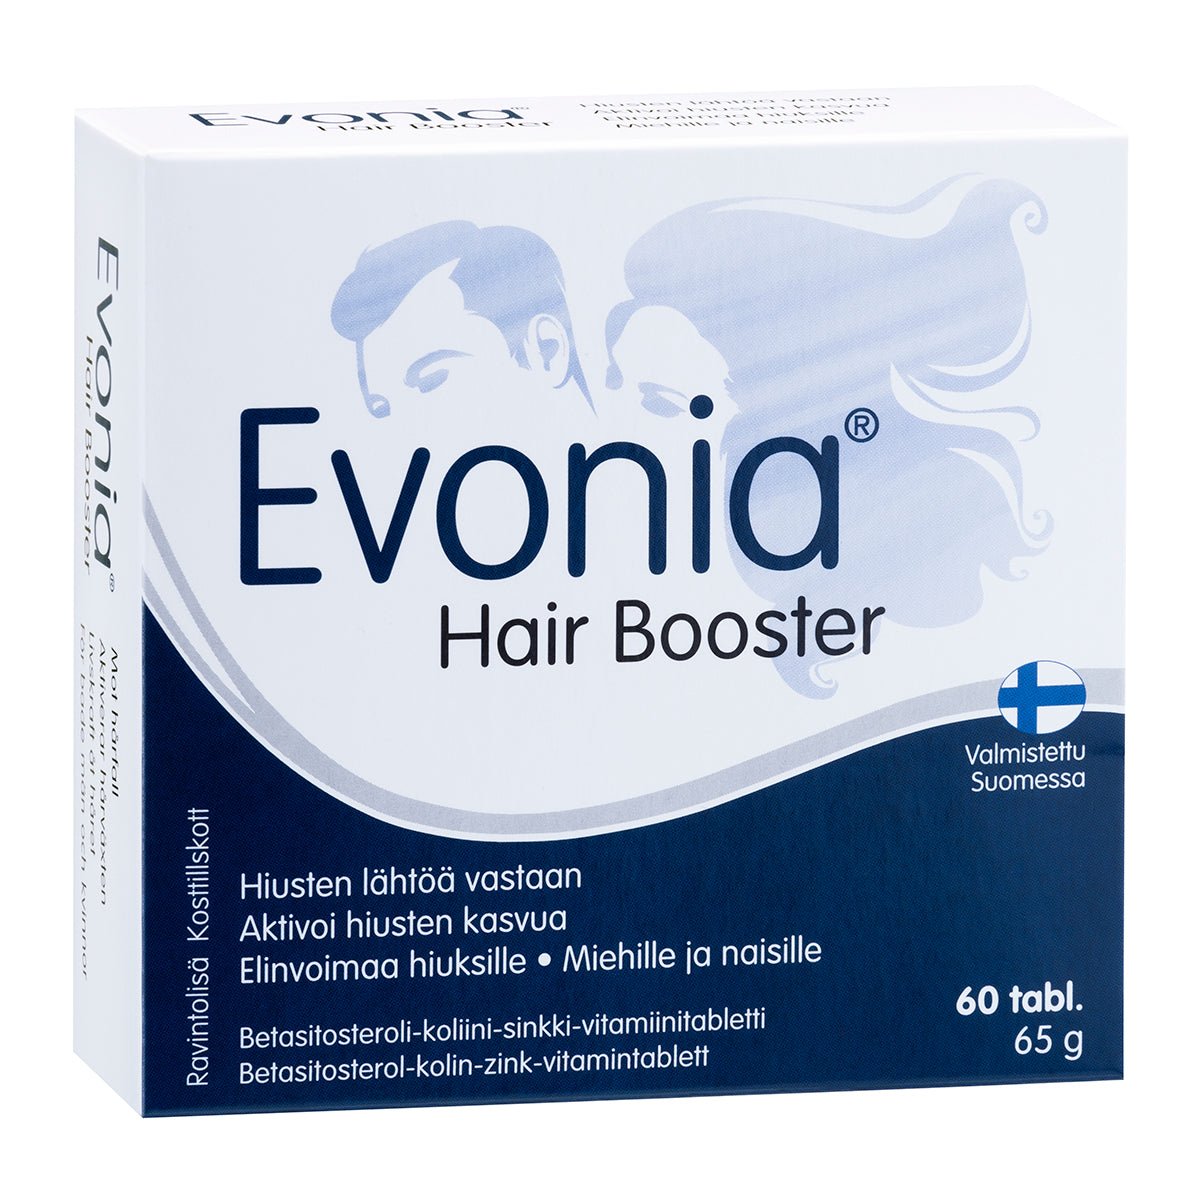 Hankintatukku Evonia Hair Booster, 60 tabl.